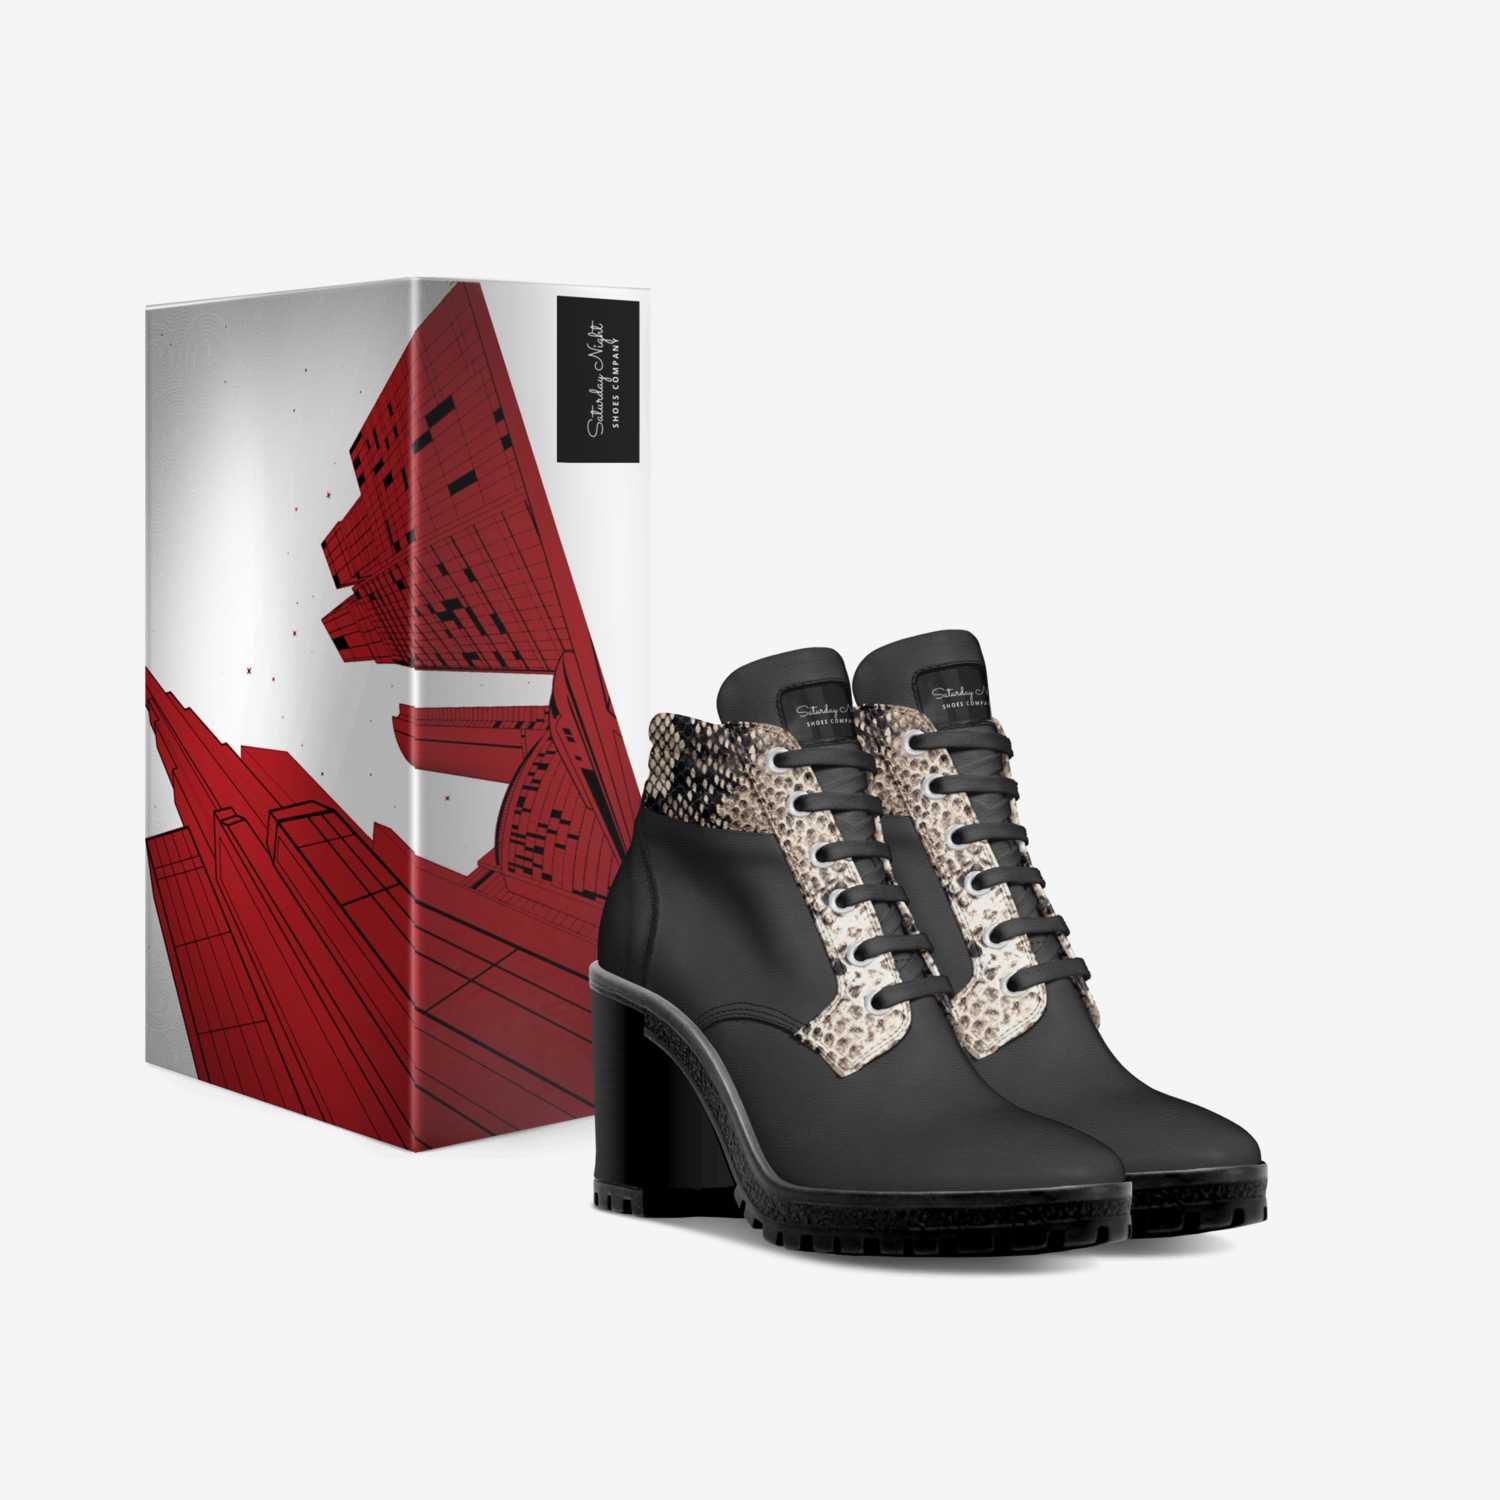 Saturday Night custom made in Italy shoes by Tisha Trekell | Box view